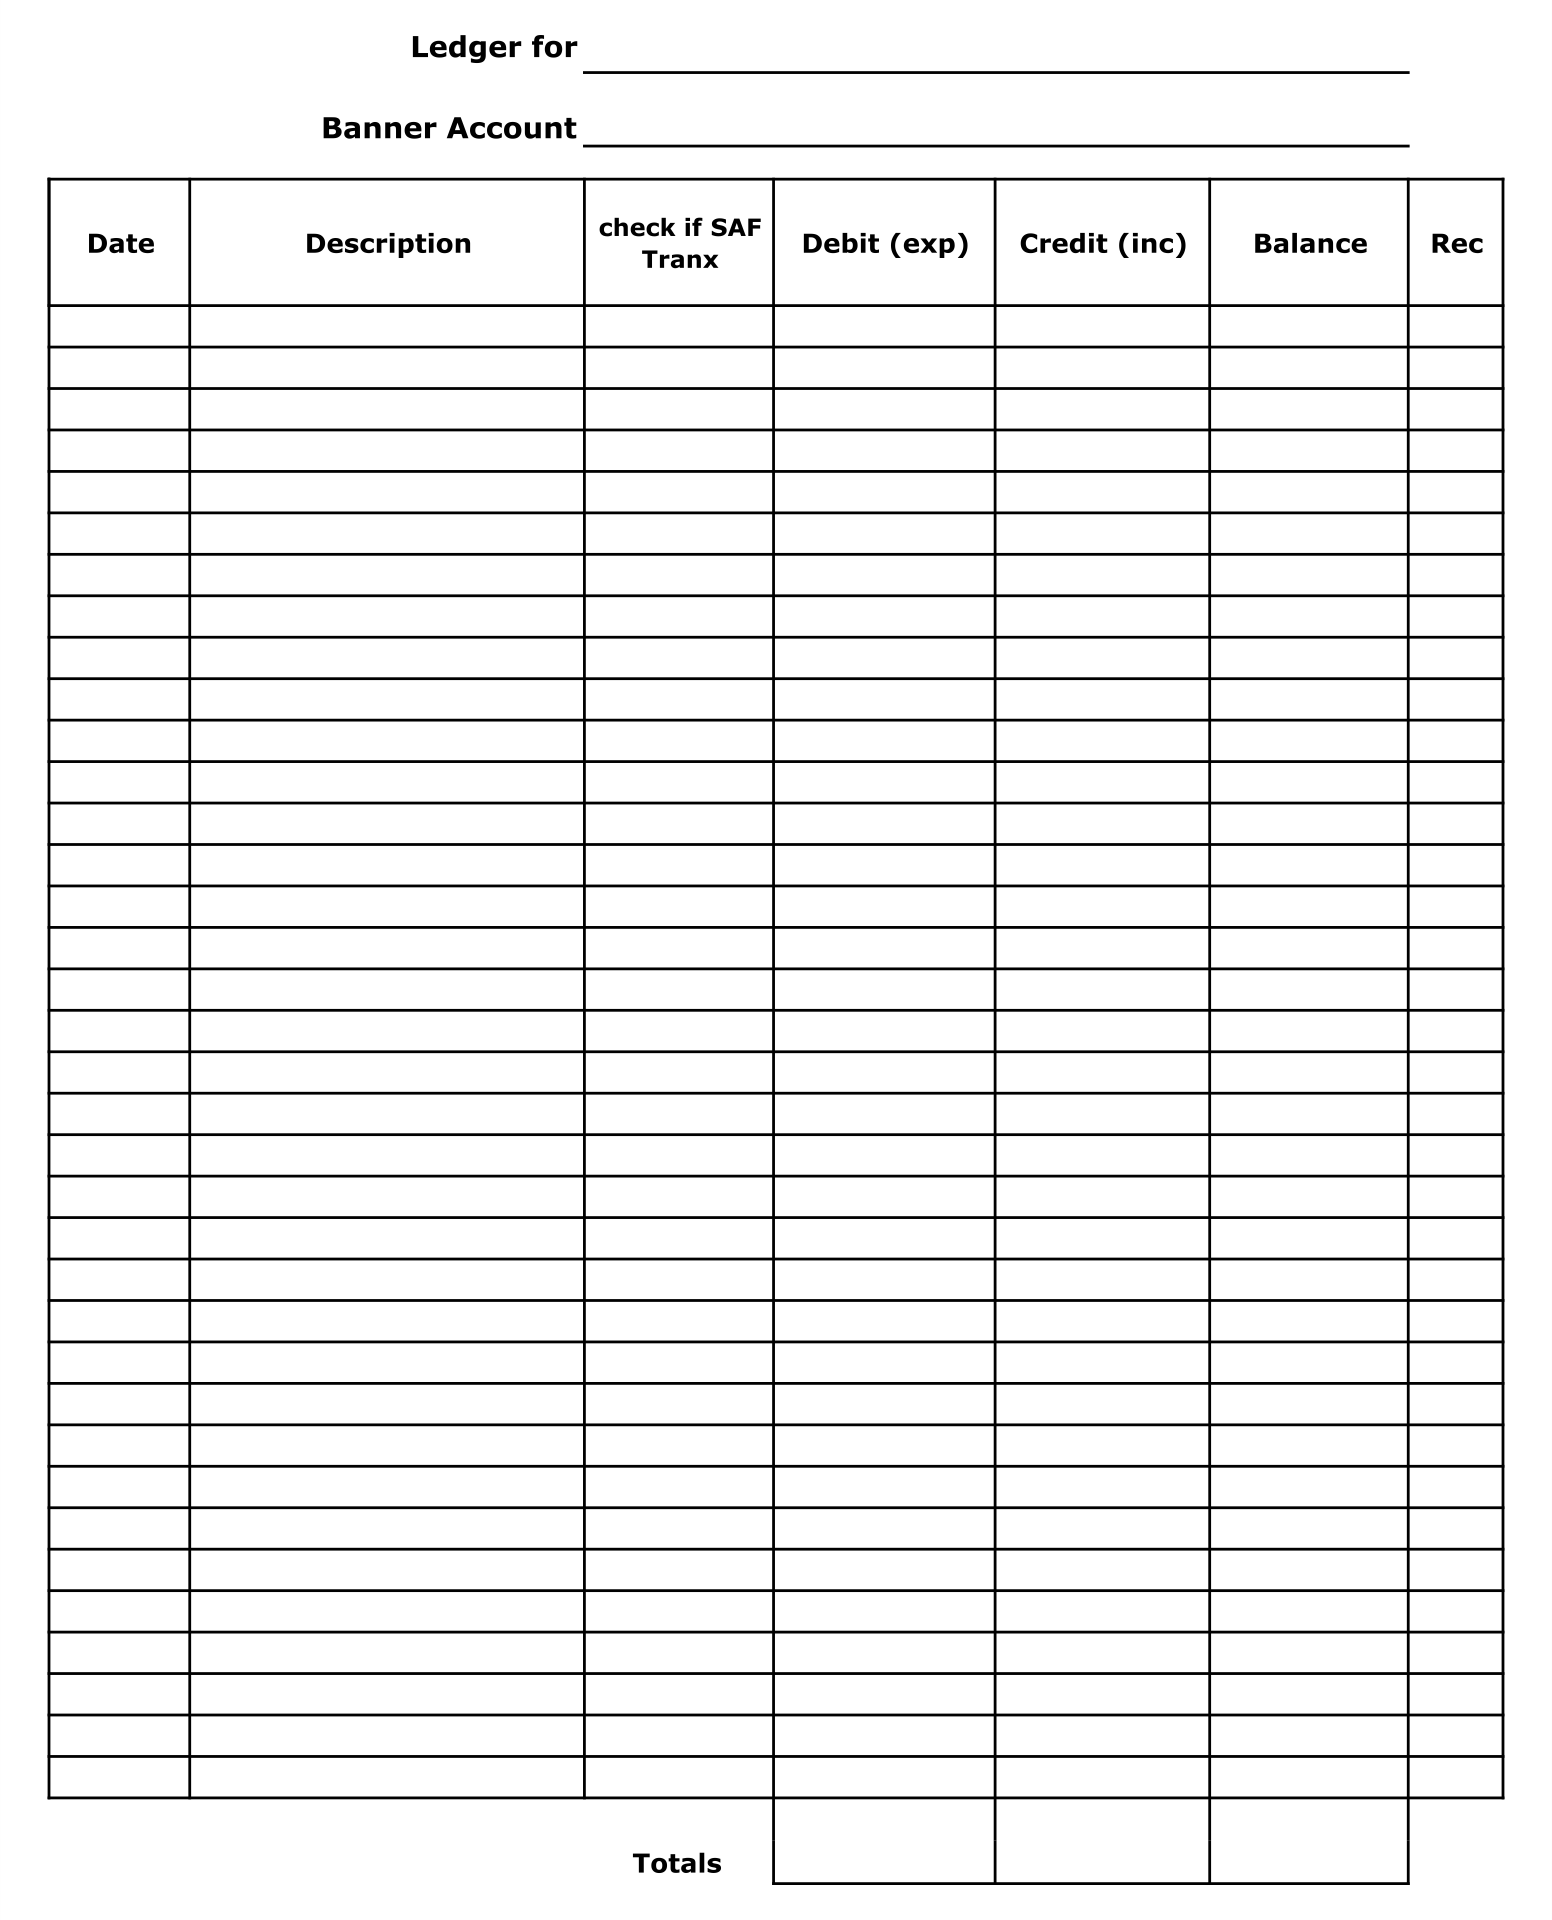 blank 10 column worksheet template